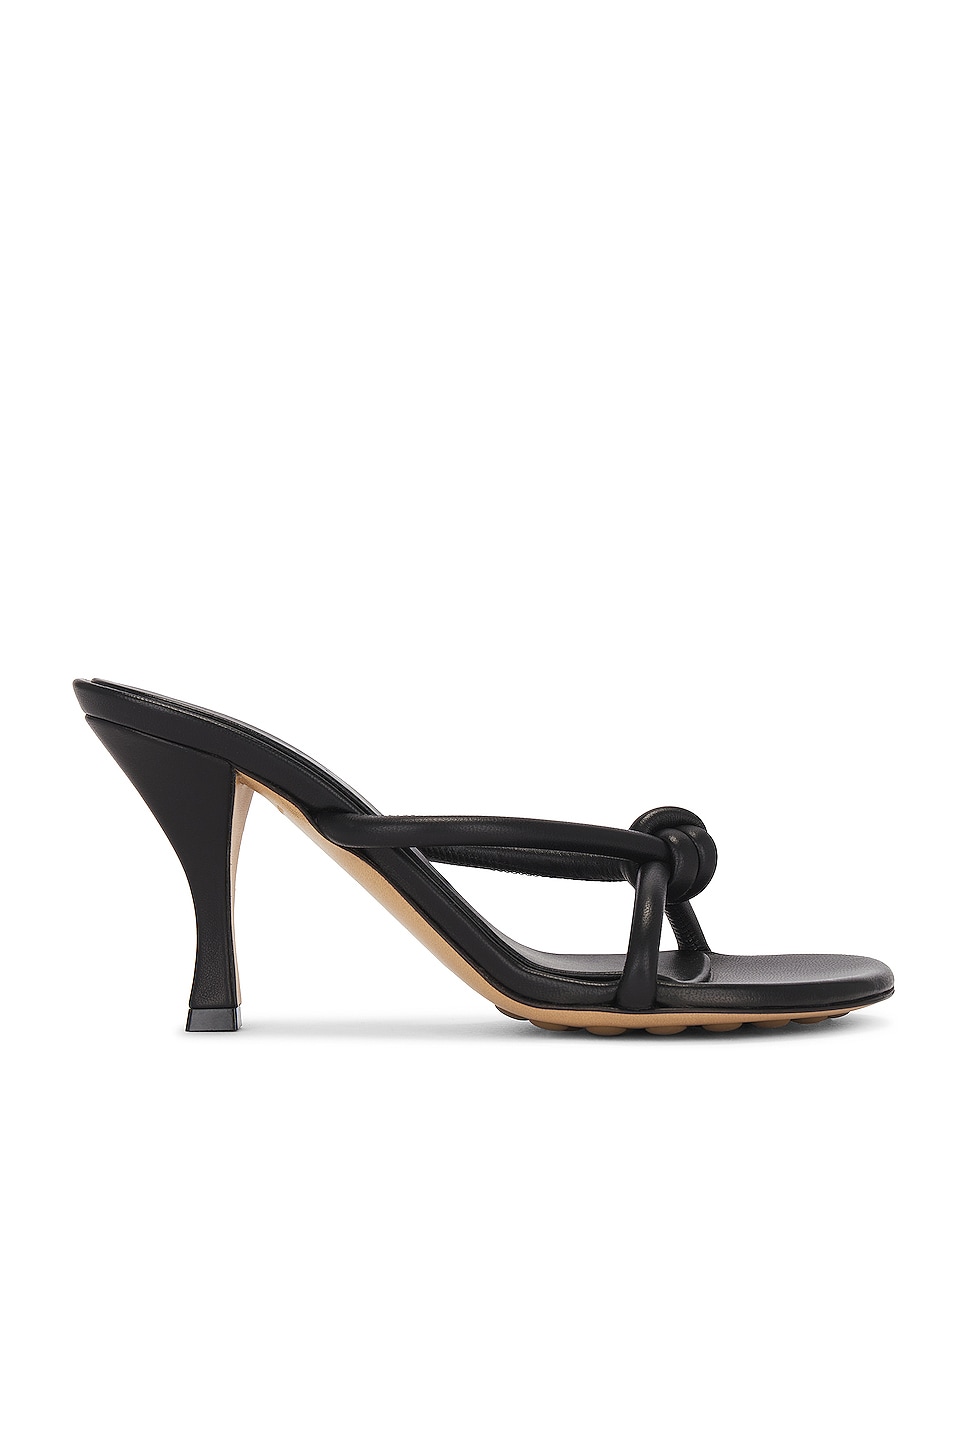 Image 1 of Bottega Veneta Blink Mule Sandal in Black